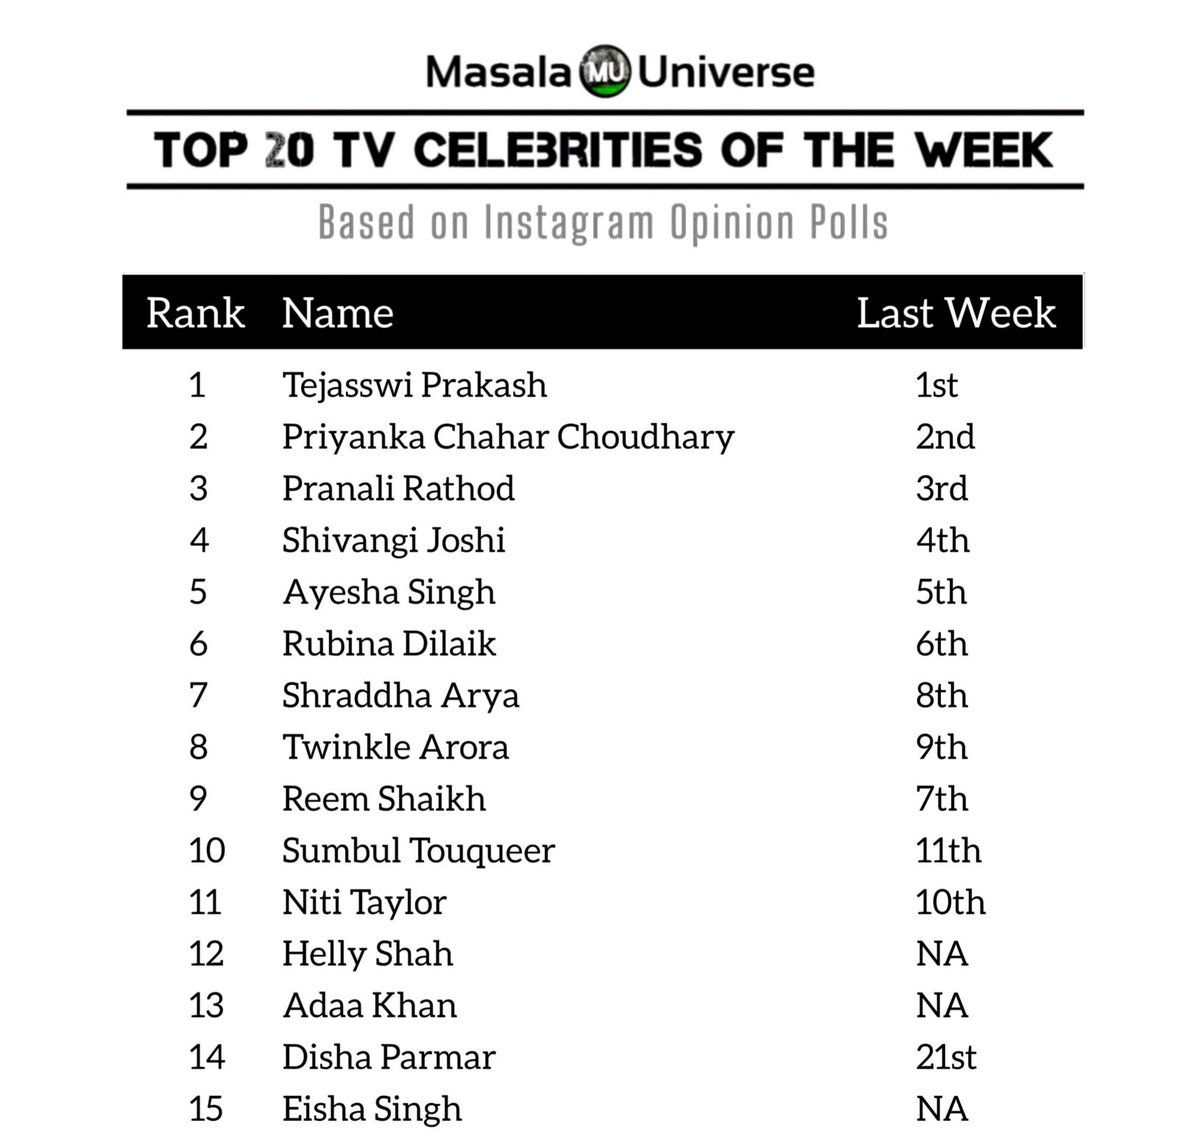 This Week Is🔥🫶
➡️Teju Top at IF
➡️ Teju Top at FMN
➡️ Teju Top at Top20 Tv Celebrity list
➡️ Naagin6 Top 2 at Online Trp(41)
➡️ Naagin6 Top 4 at IF
➡️ #Prathna Top 5 at FMN
➡️ #Naagin6 Top 6 at FMN
Congratulations🥳🎉 @itsmetejasswi 
Touch wood 🙌🏻 
#TejasswiPrakash #TejaTroops